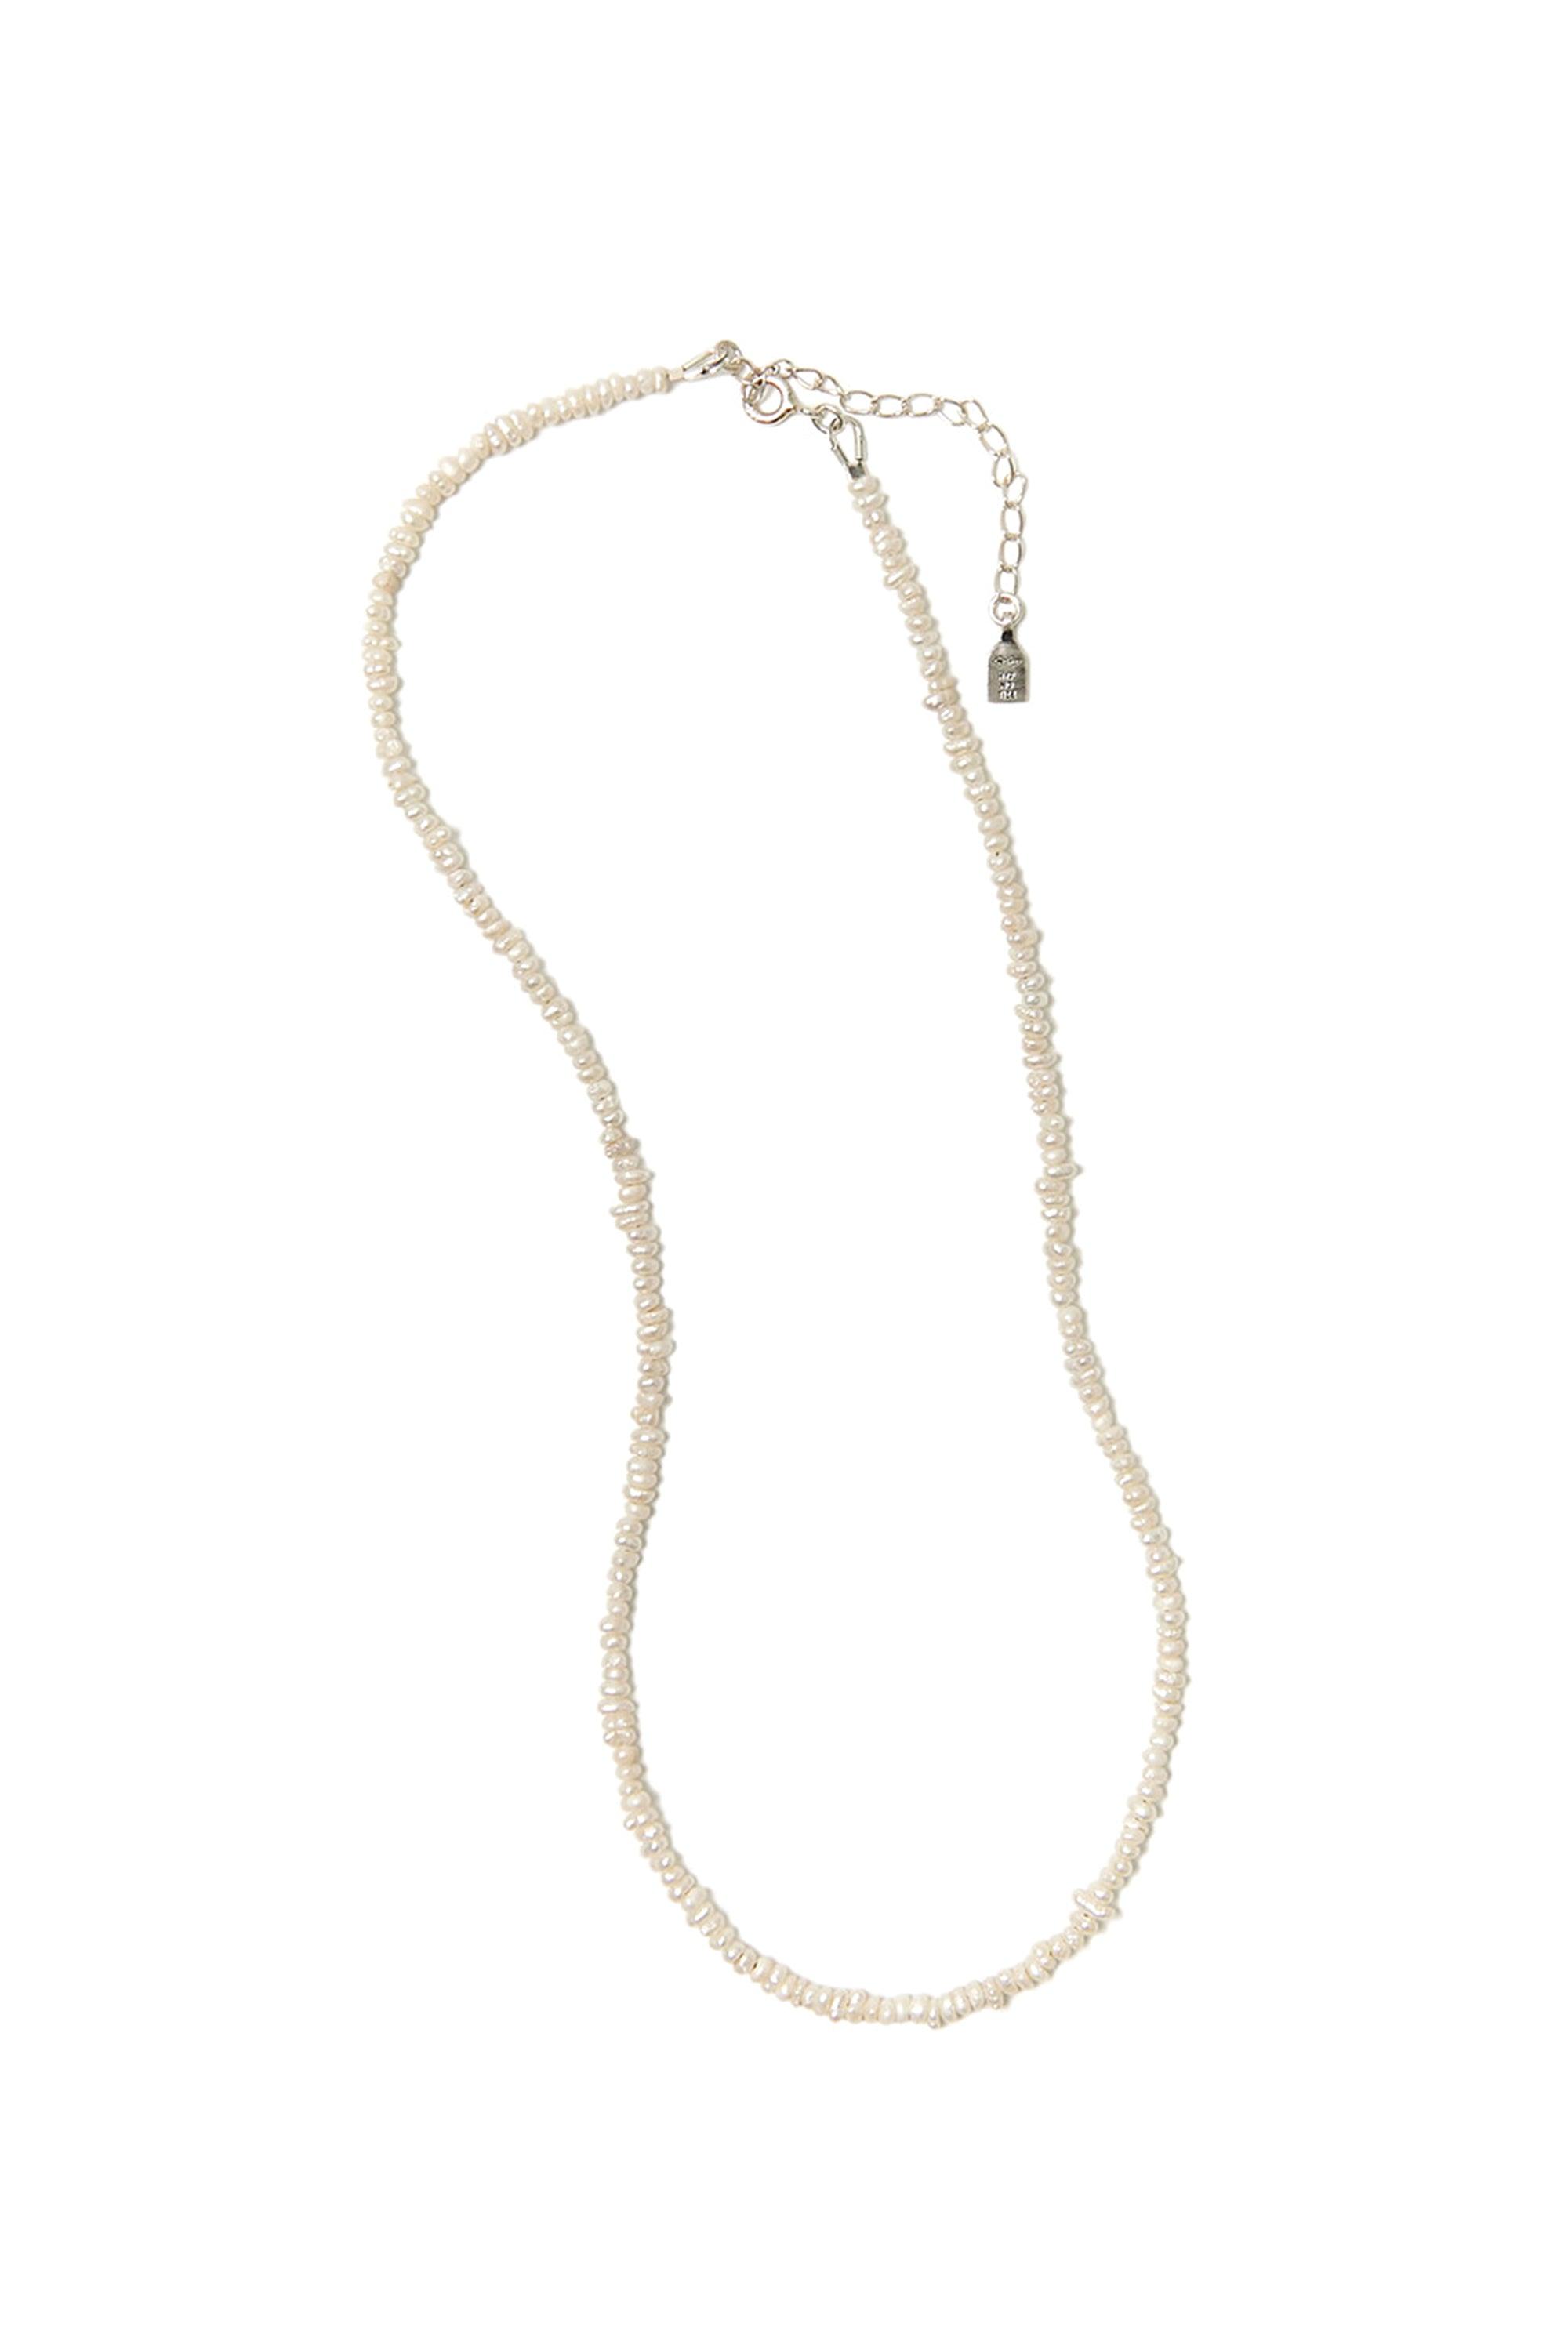 Shop Unshaped Milky White Pearl Chain - CherishBox –  CherishBox_pearljewellery